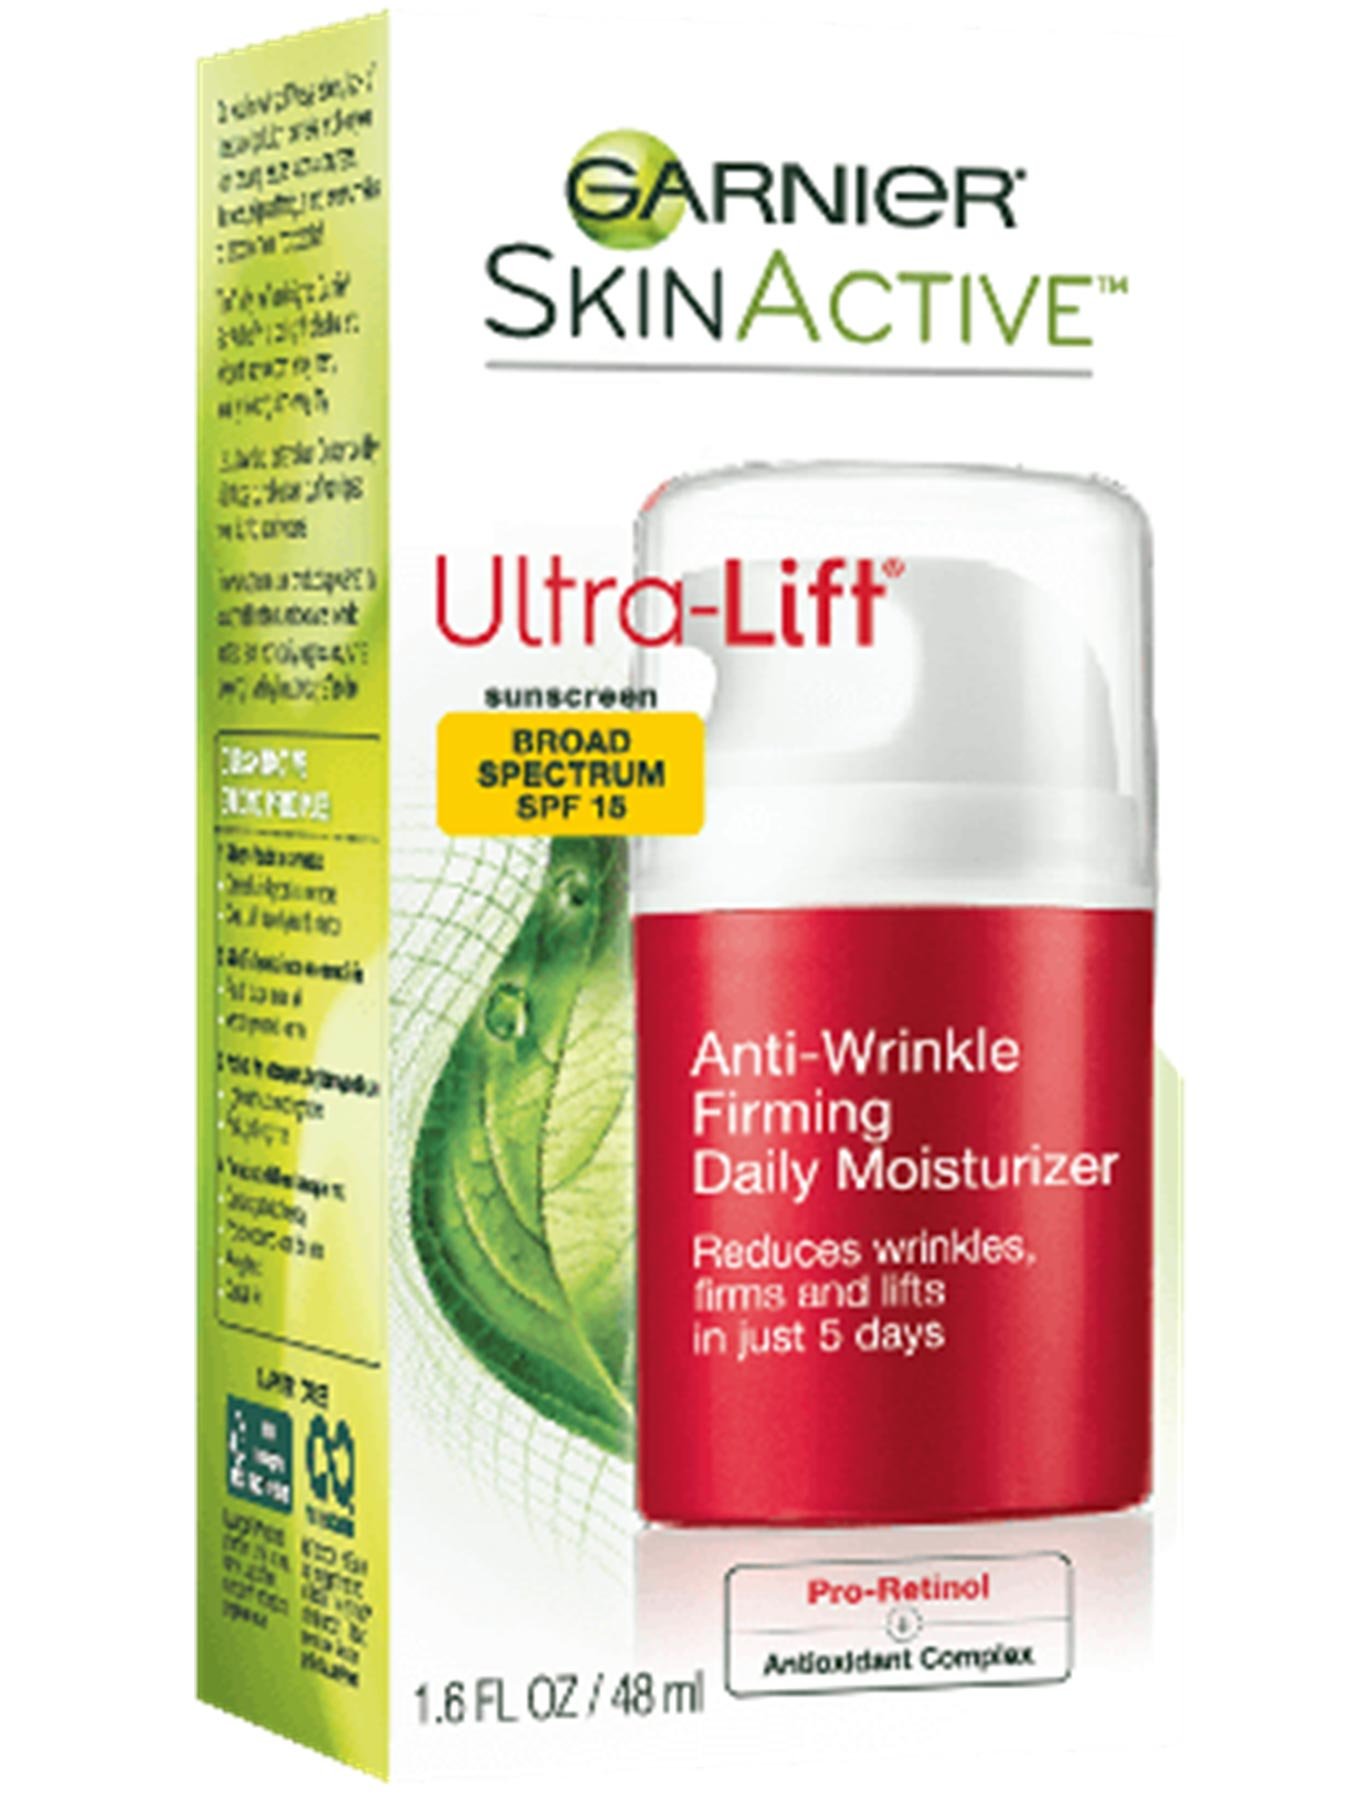 garnier_skinactive_ultra_lift_anti_wrinkle_firming_moisturizer_skin care_2